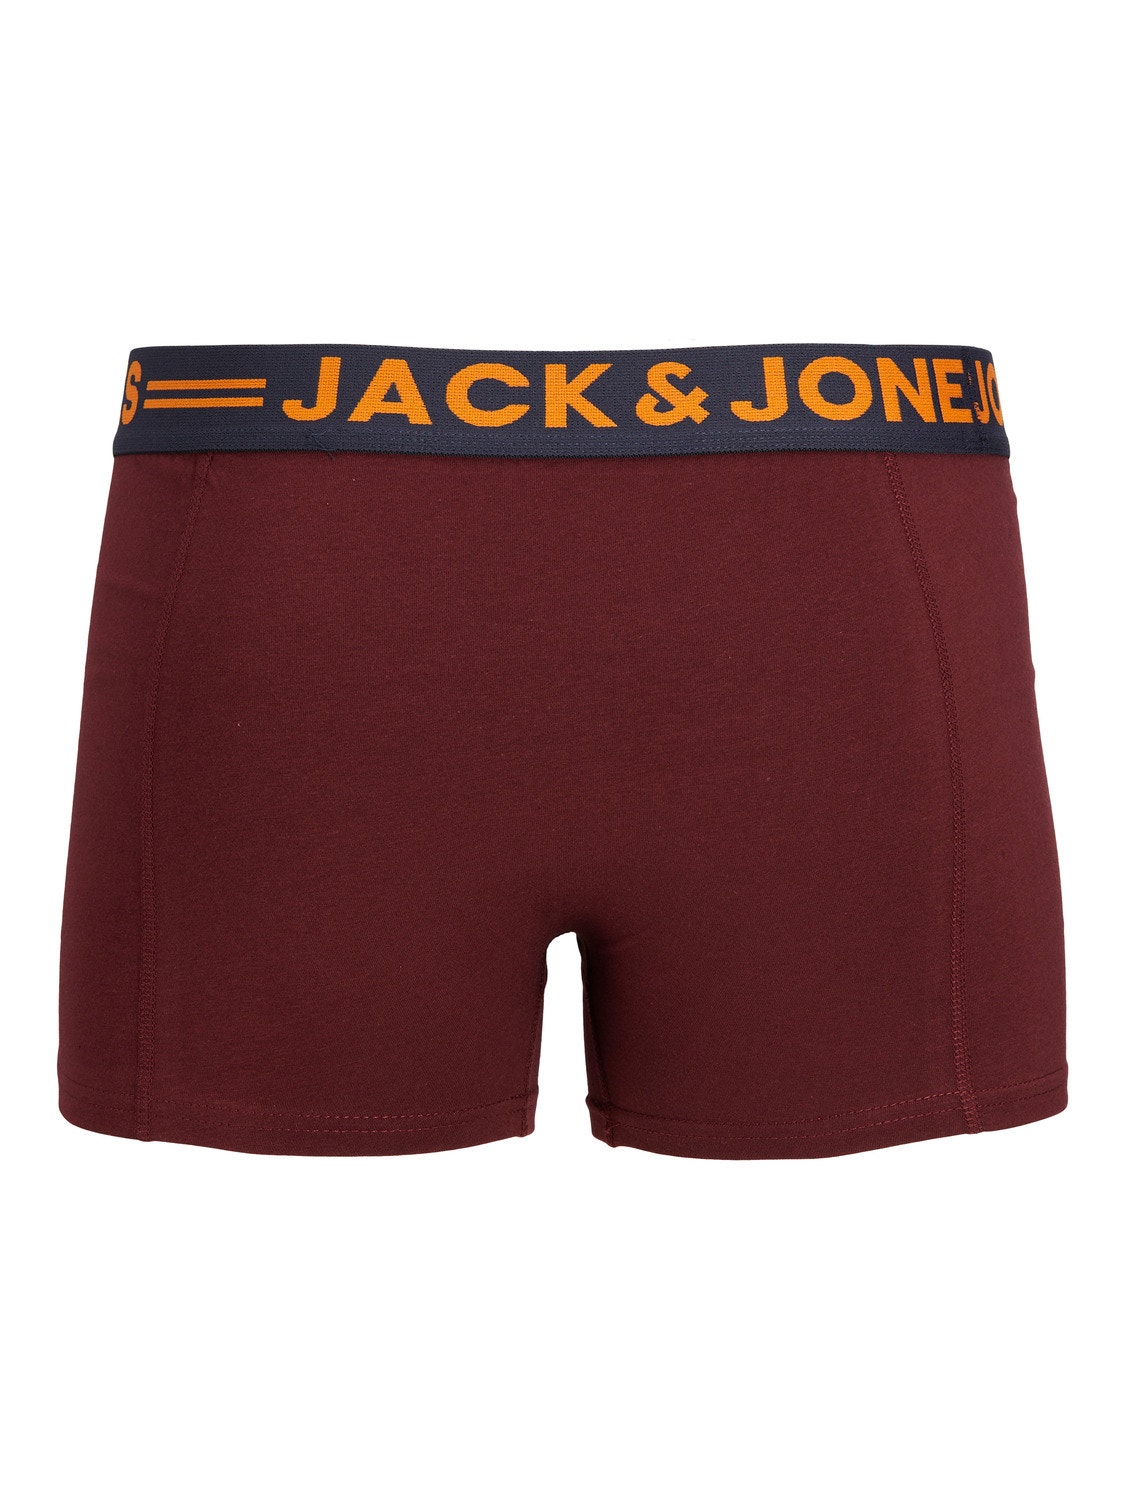 Jack & Jones 3-pak Trunks -Burgundy - 12113943